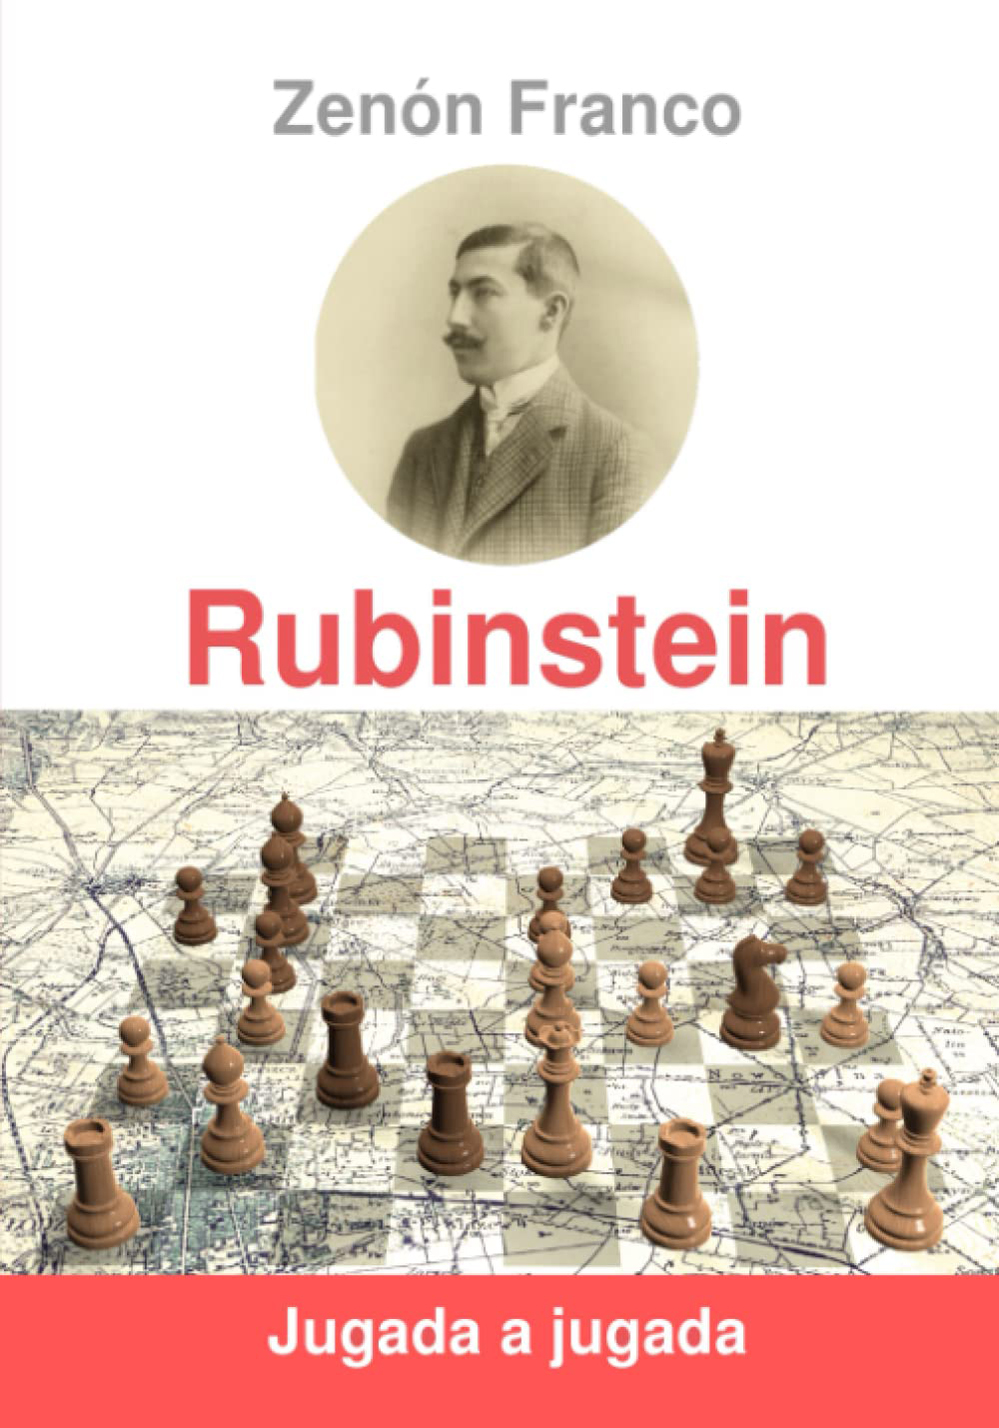 Rubinstein jugada a jugada (Tapa dura)